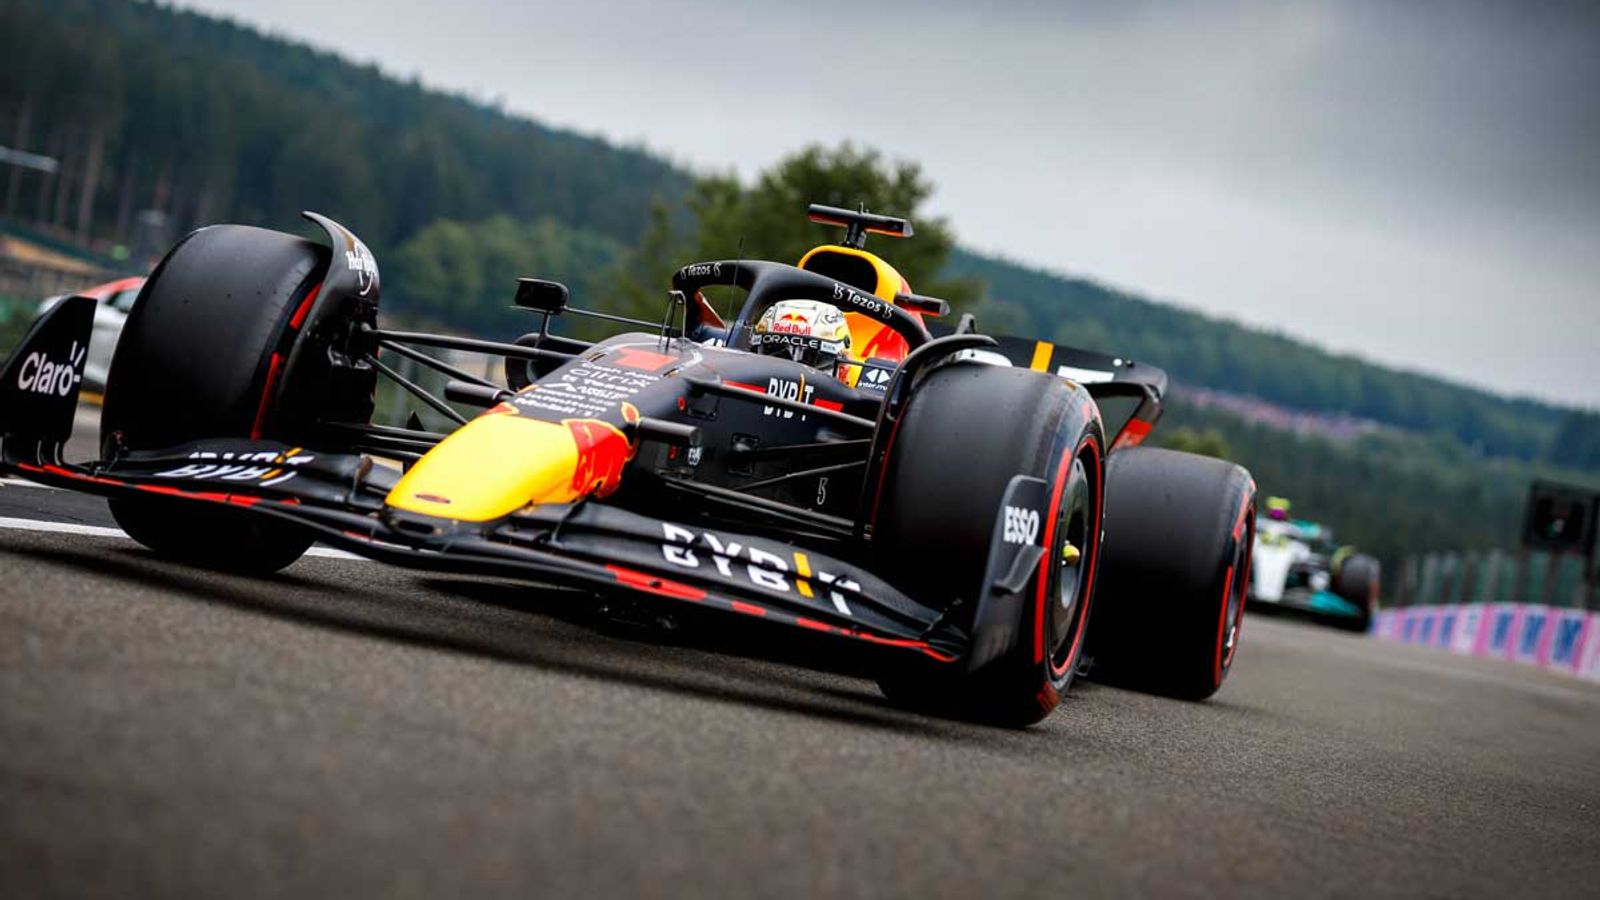 Formule 1: Max Verstappen wint 2e vrije training op Spa-Francorchamps |  Formule 1 Nieuws